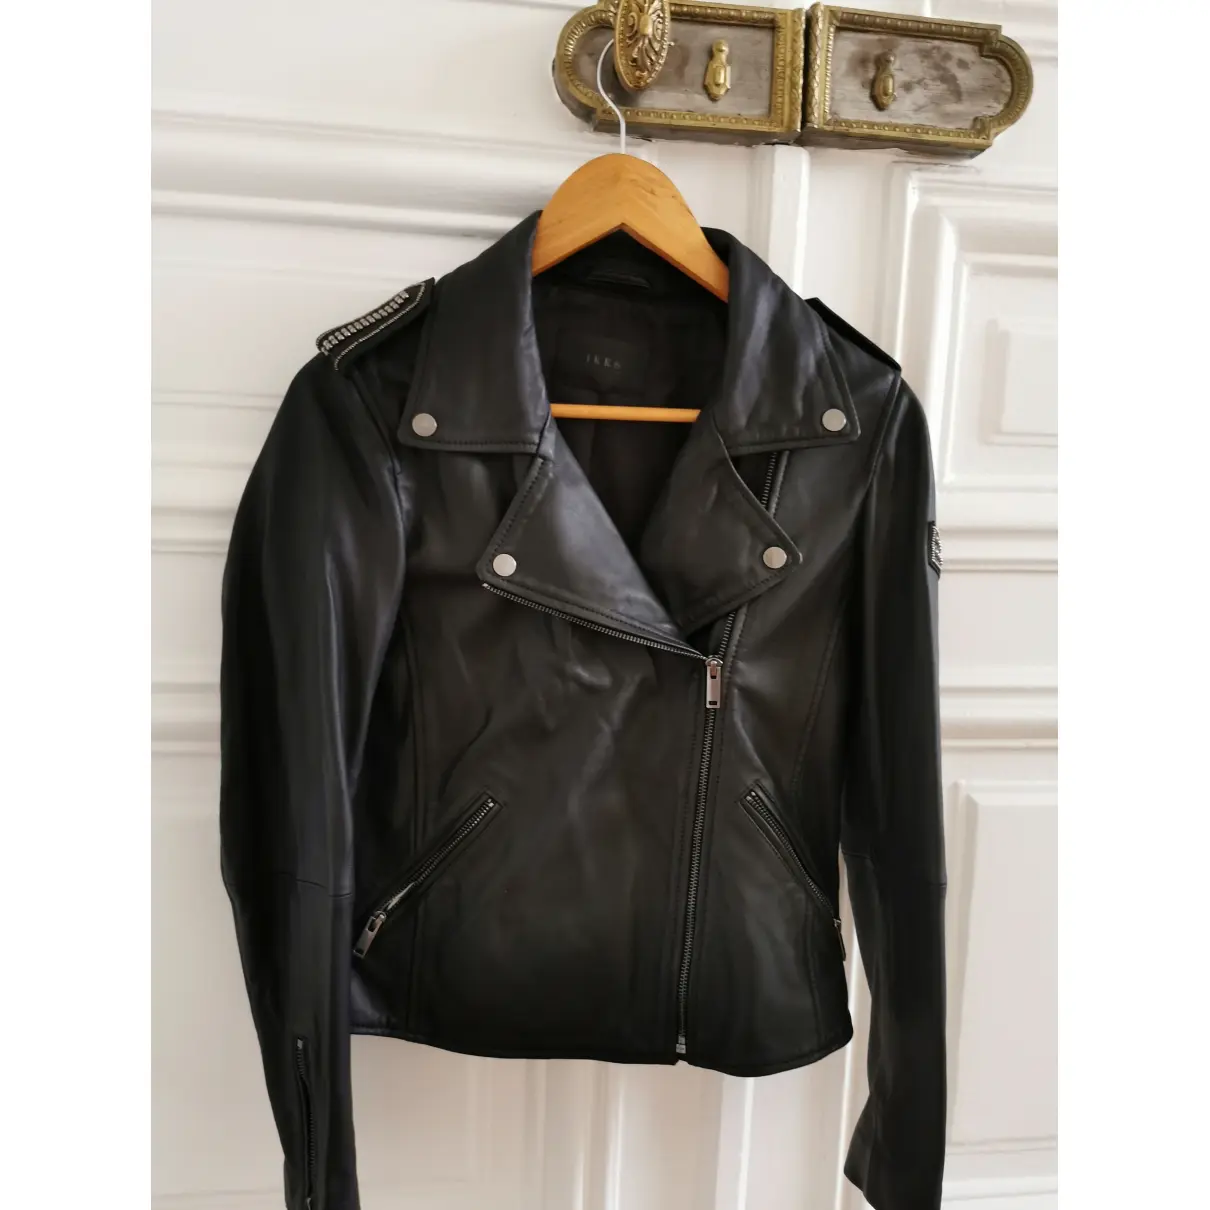 Buy Ikks Leather short vest online